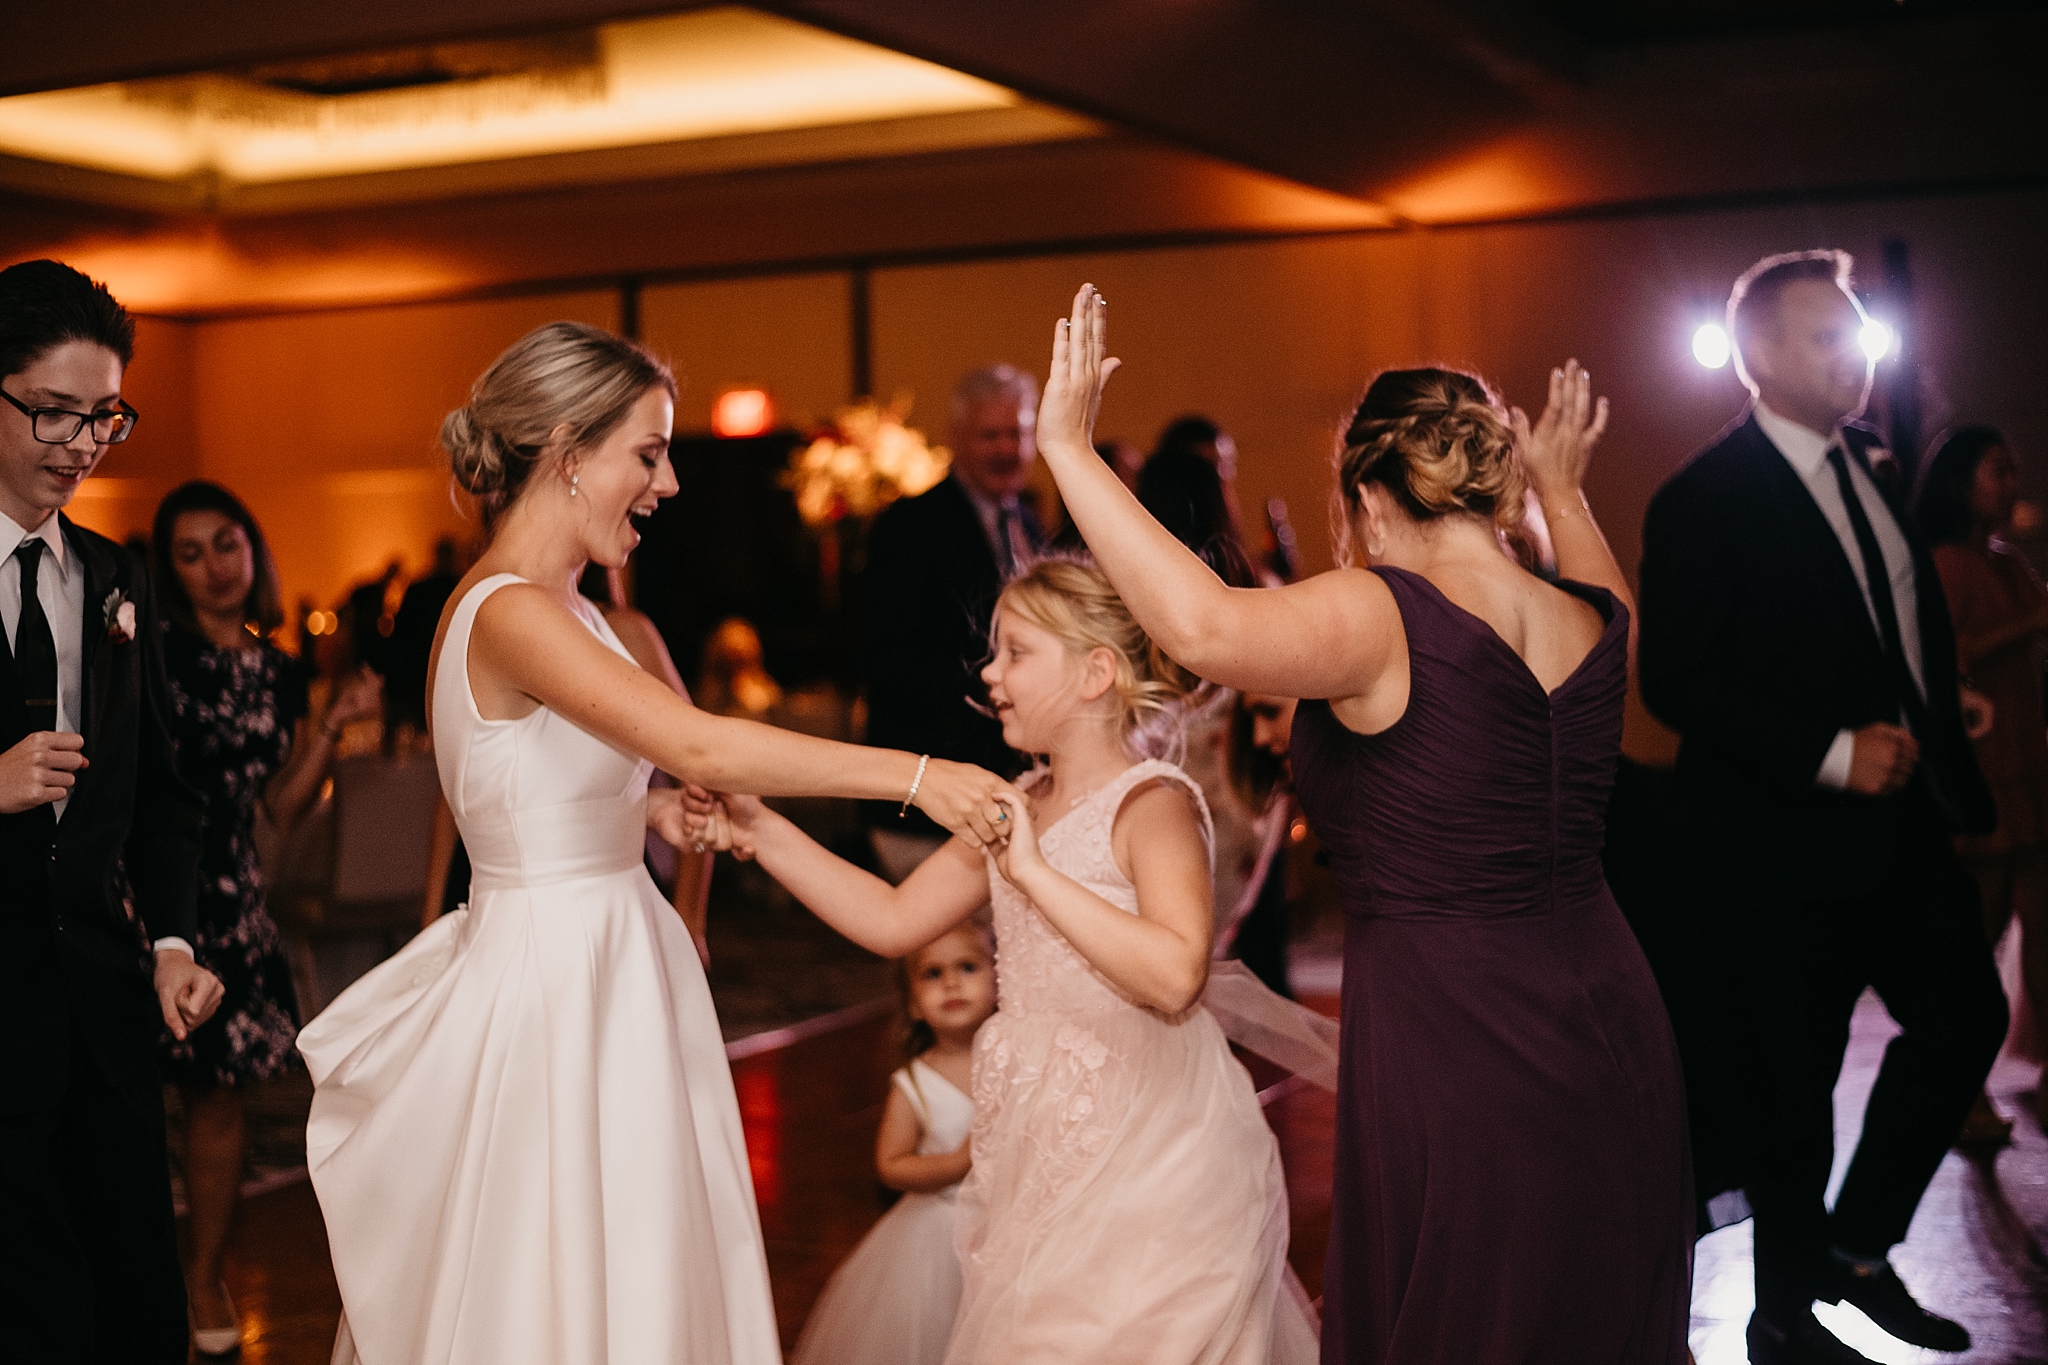 dancing-at-wedding